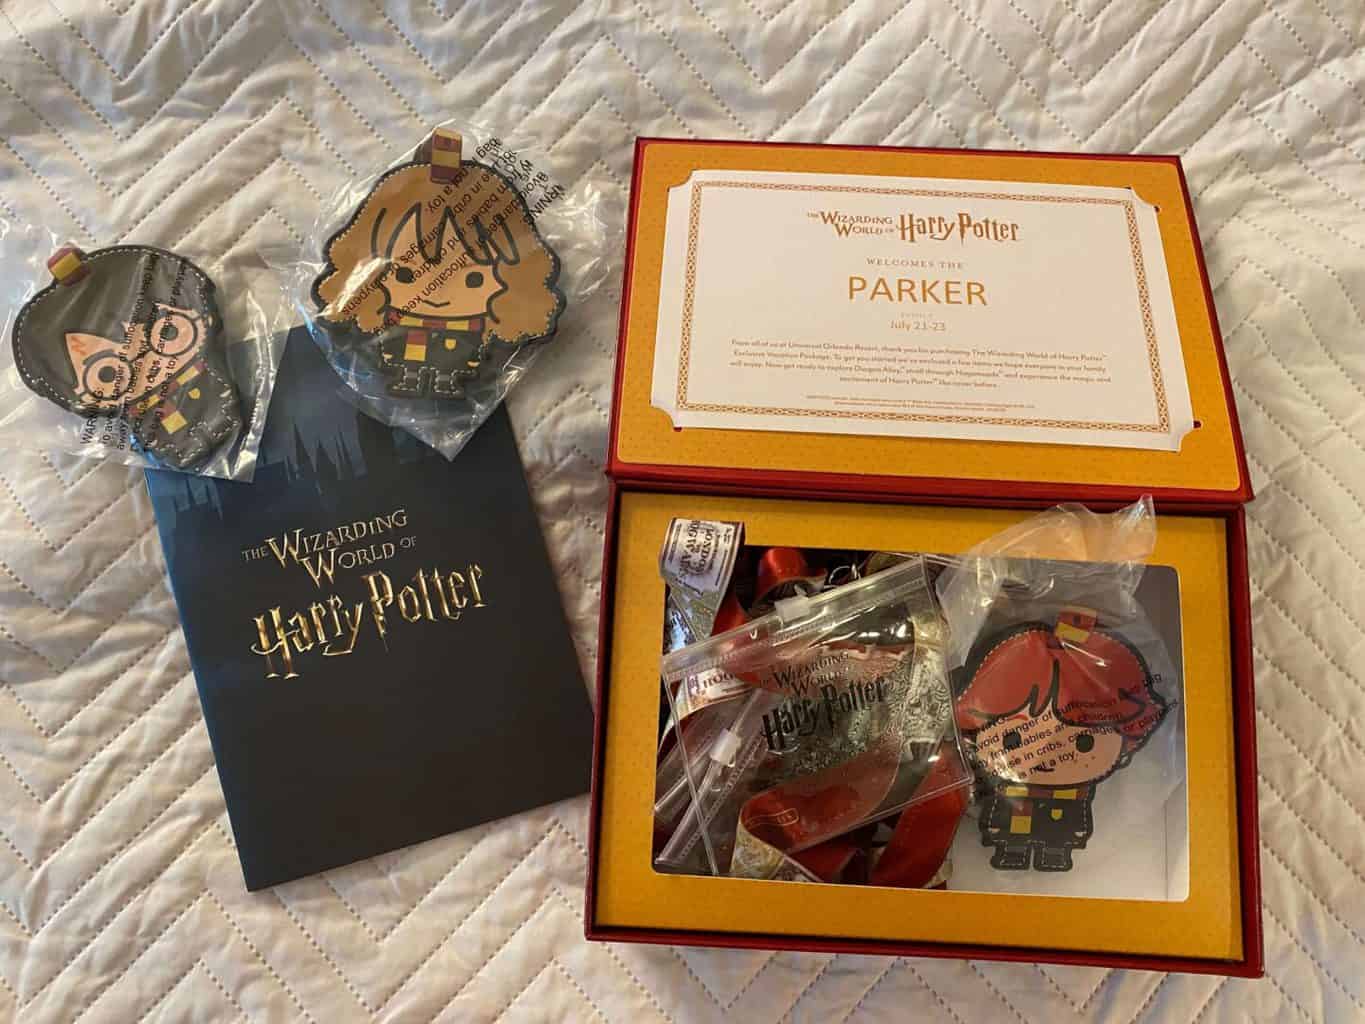 wizarding world of Harry Potter vacation package keepsake box